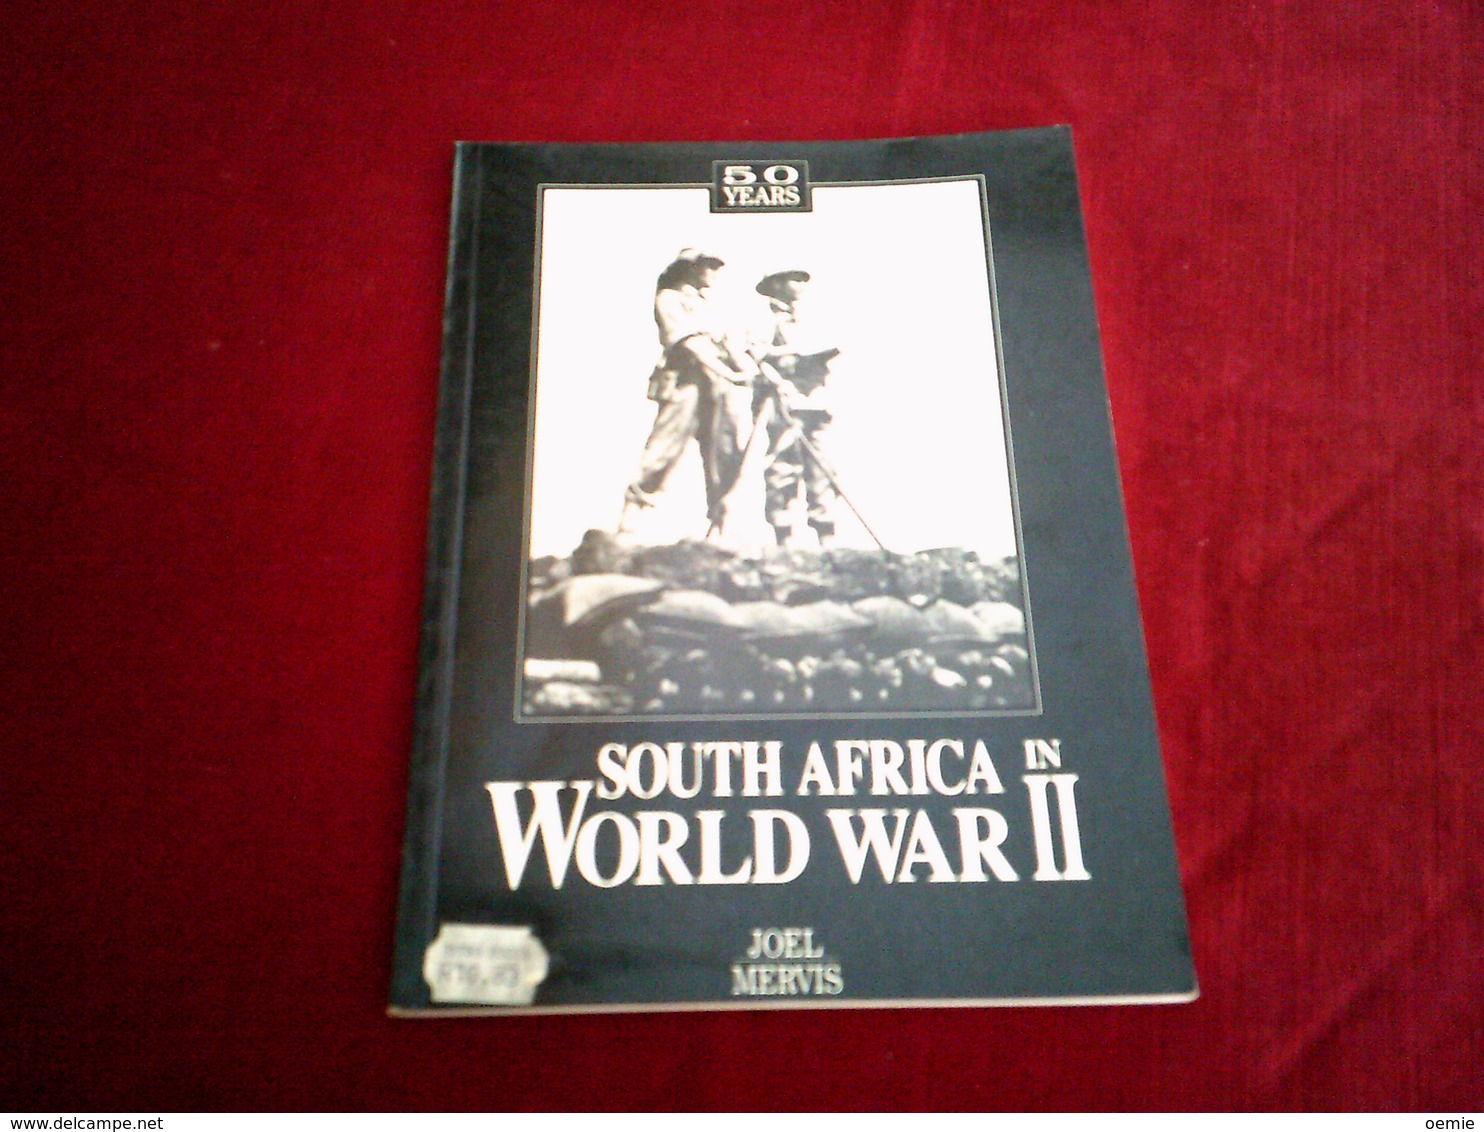 50 YEARS SOUTH AFRICA IN WORLD WAR II  PAR JOEL MERVIS - Fuerzas Armadas Americanas